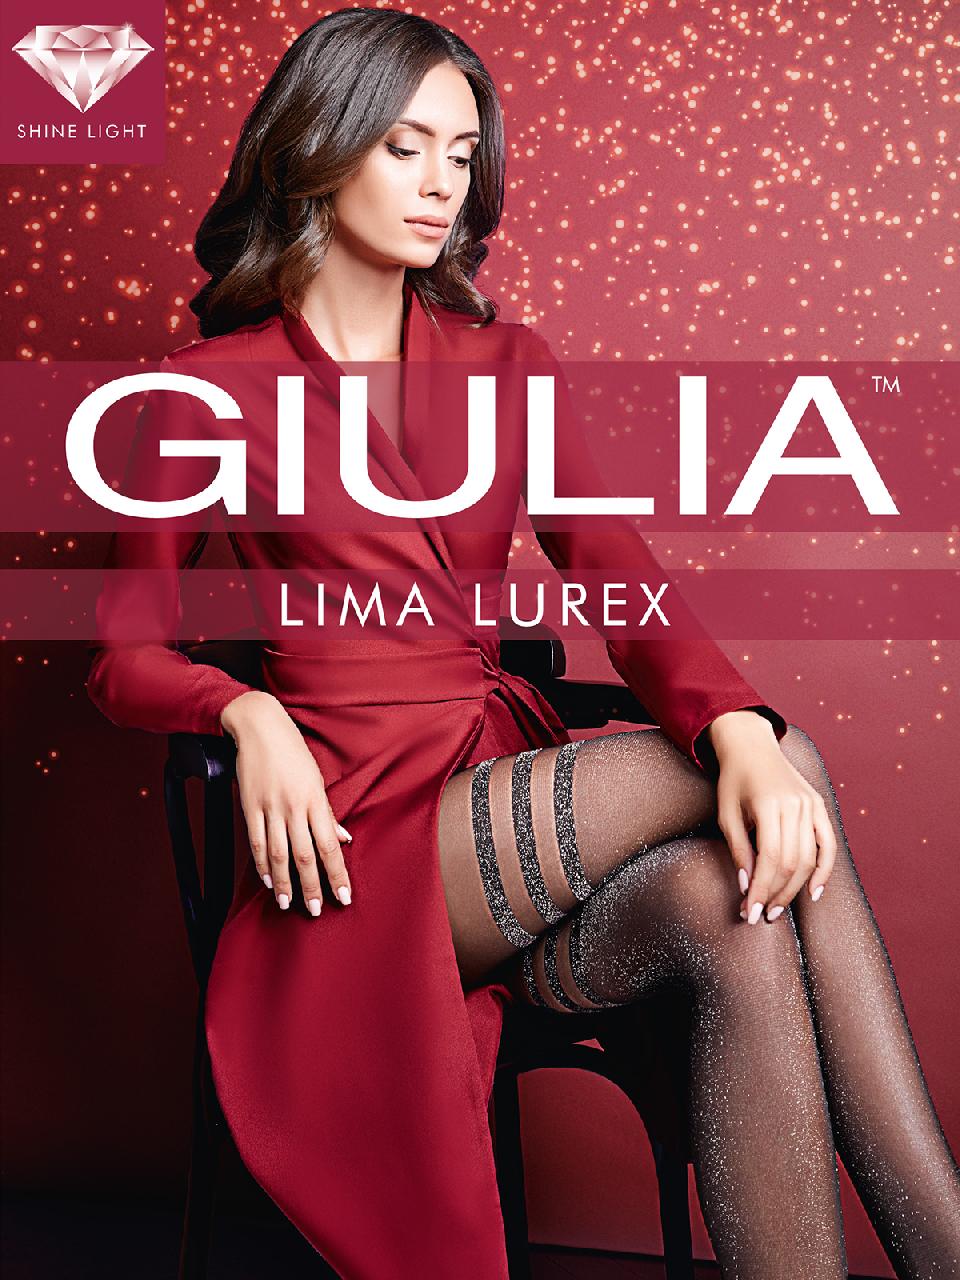 Giulia Lima Lurex 02 nero 2